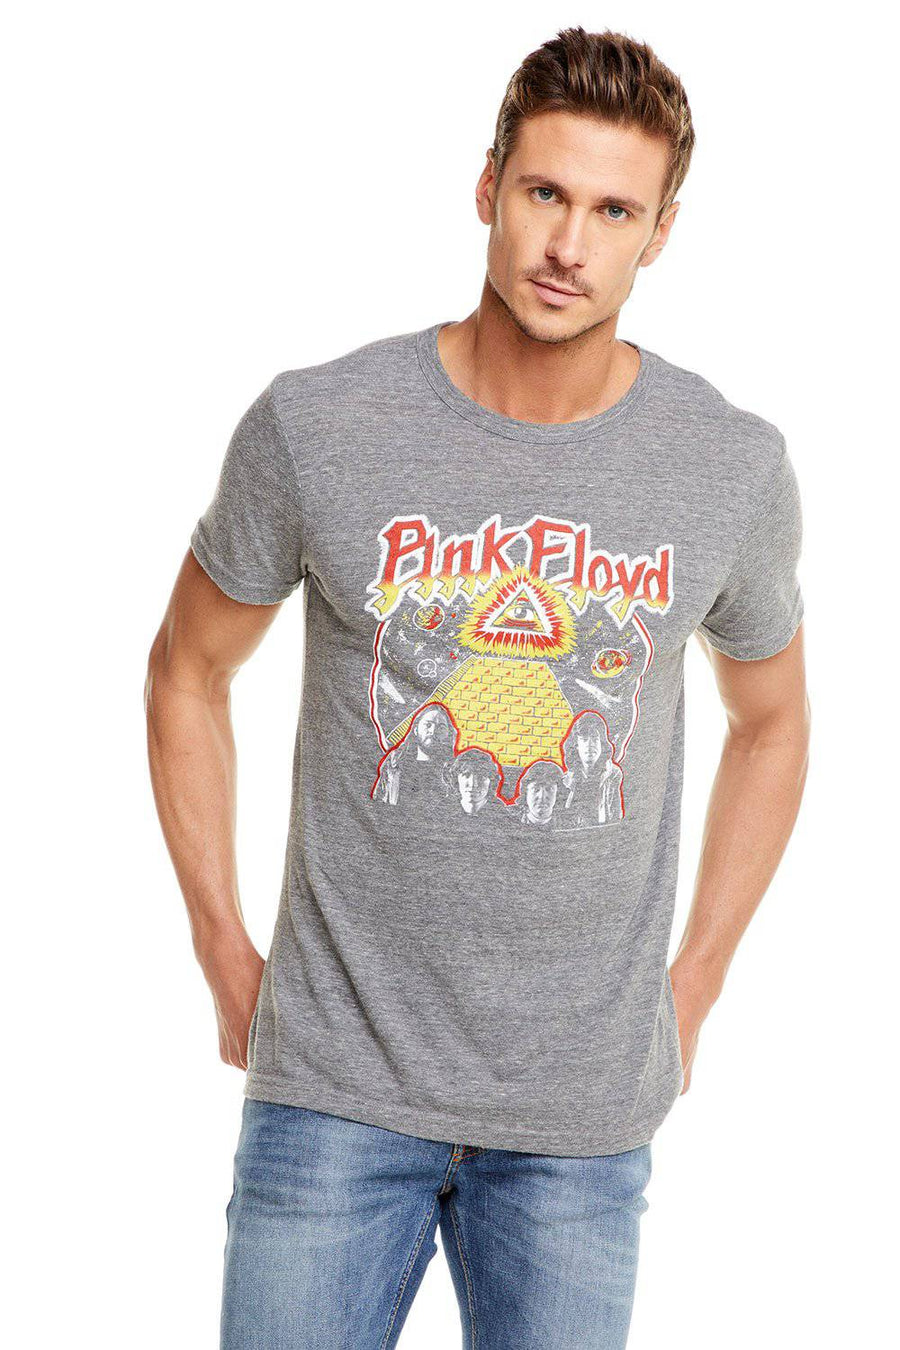 PINK FLOYD - ALL SEEING EYE MENS chaserbrand